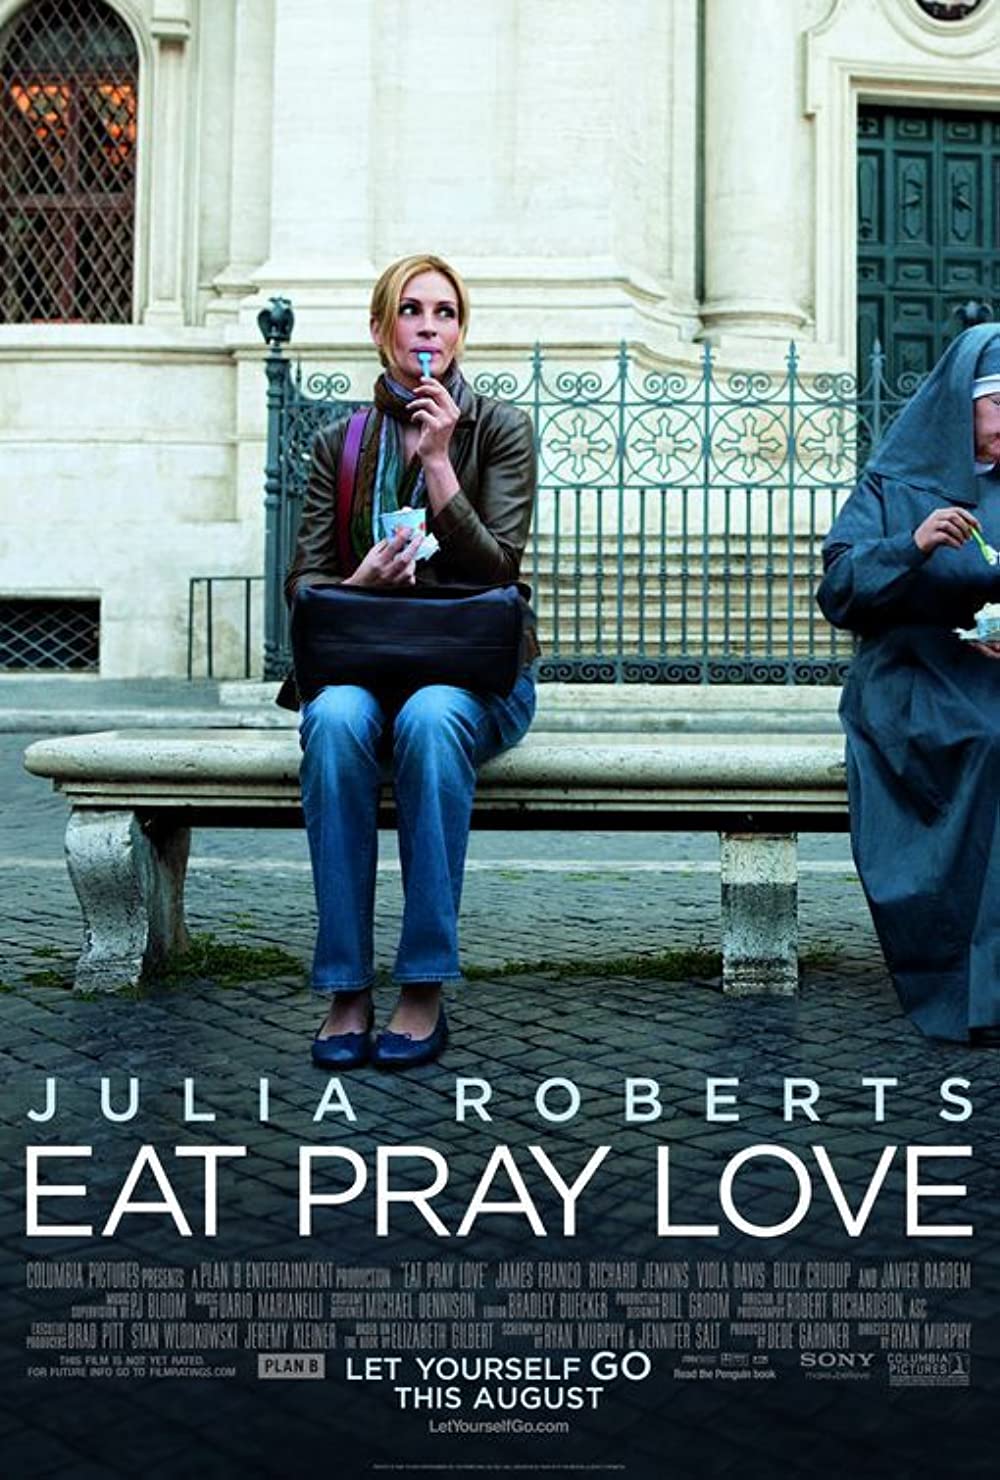 Filmbeschreibung zu Eat Pray Love